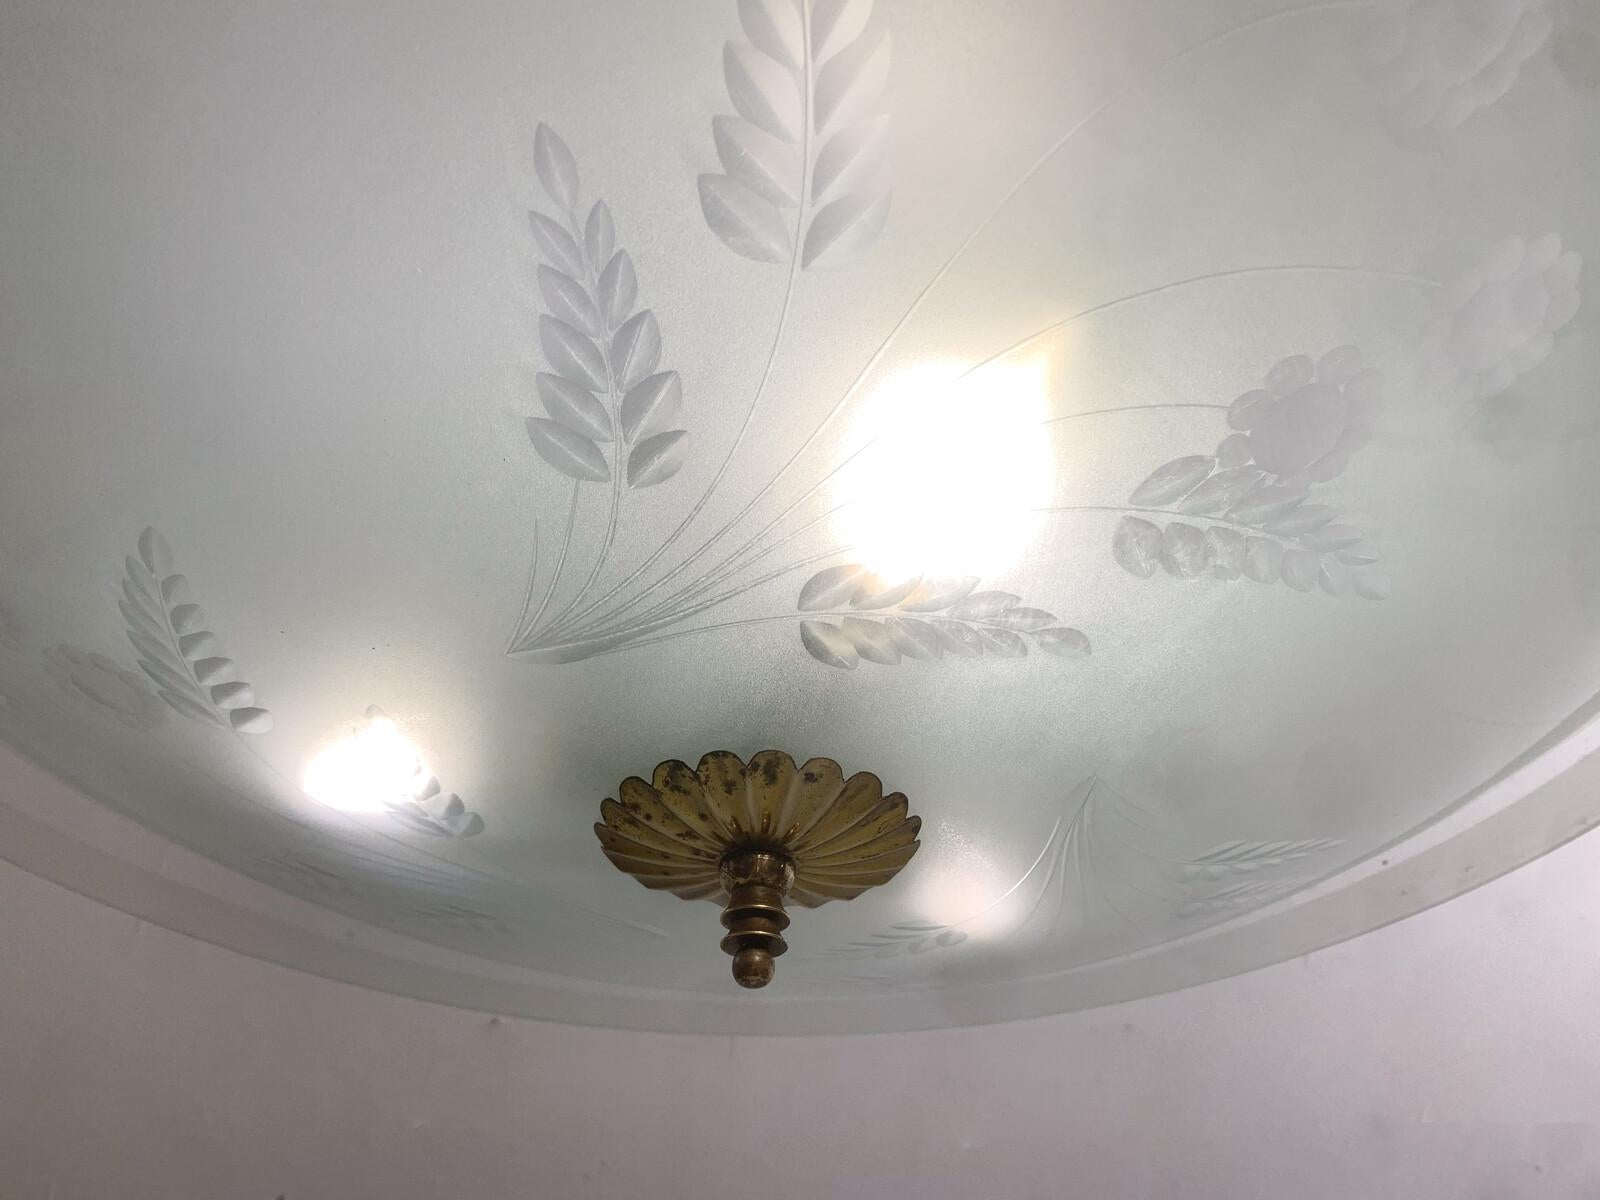 Mid-Century Modern ceiling light.